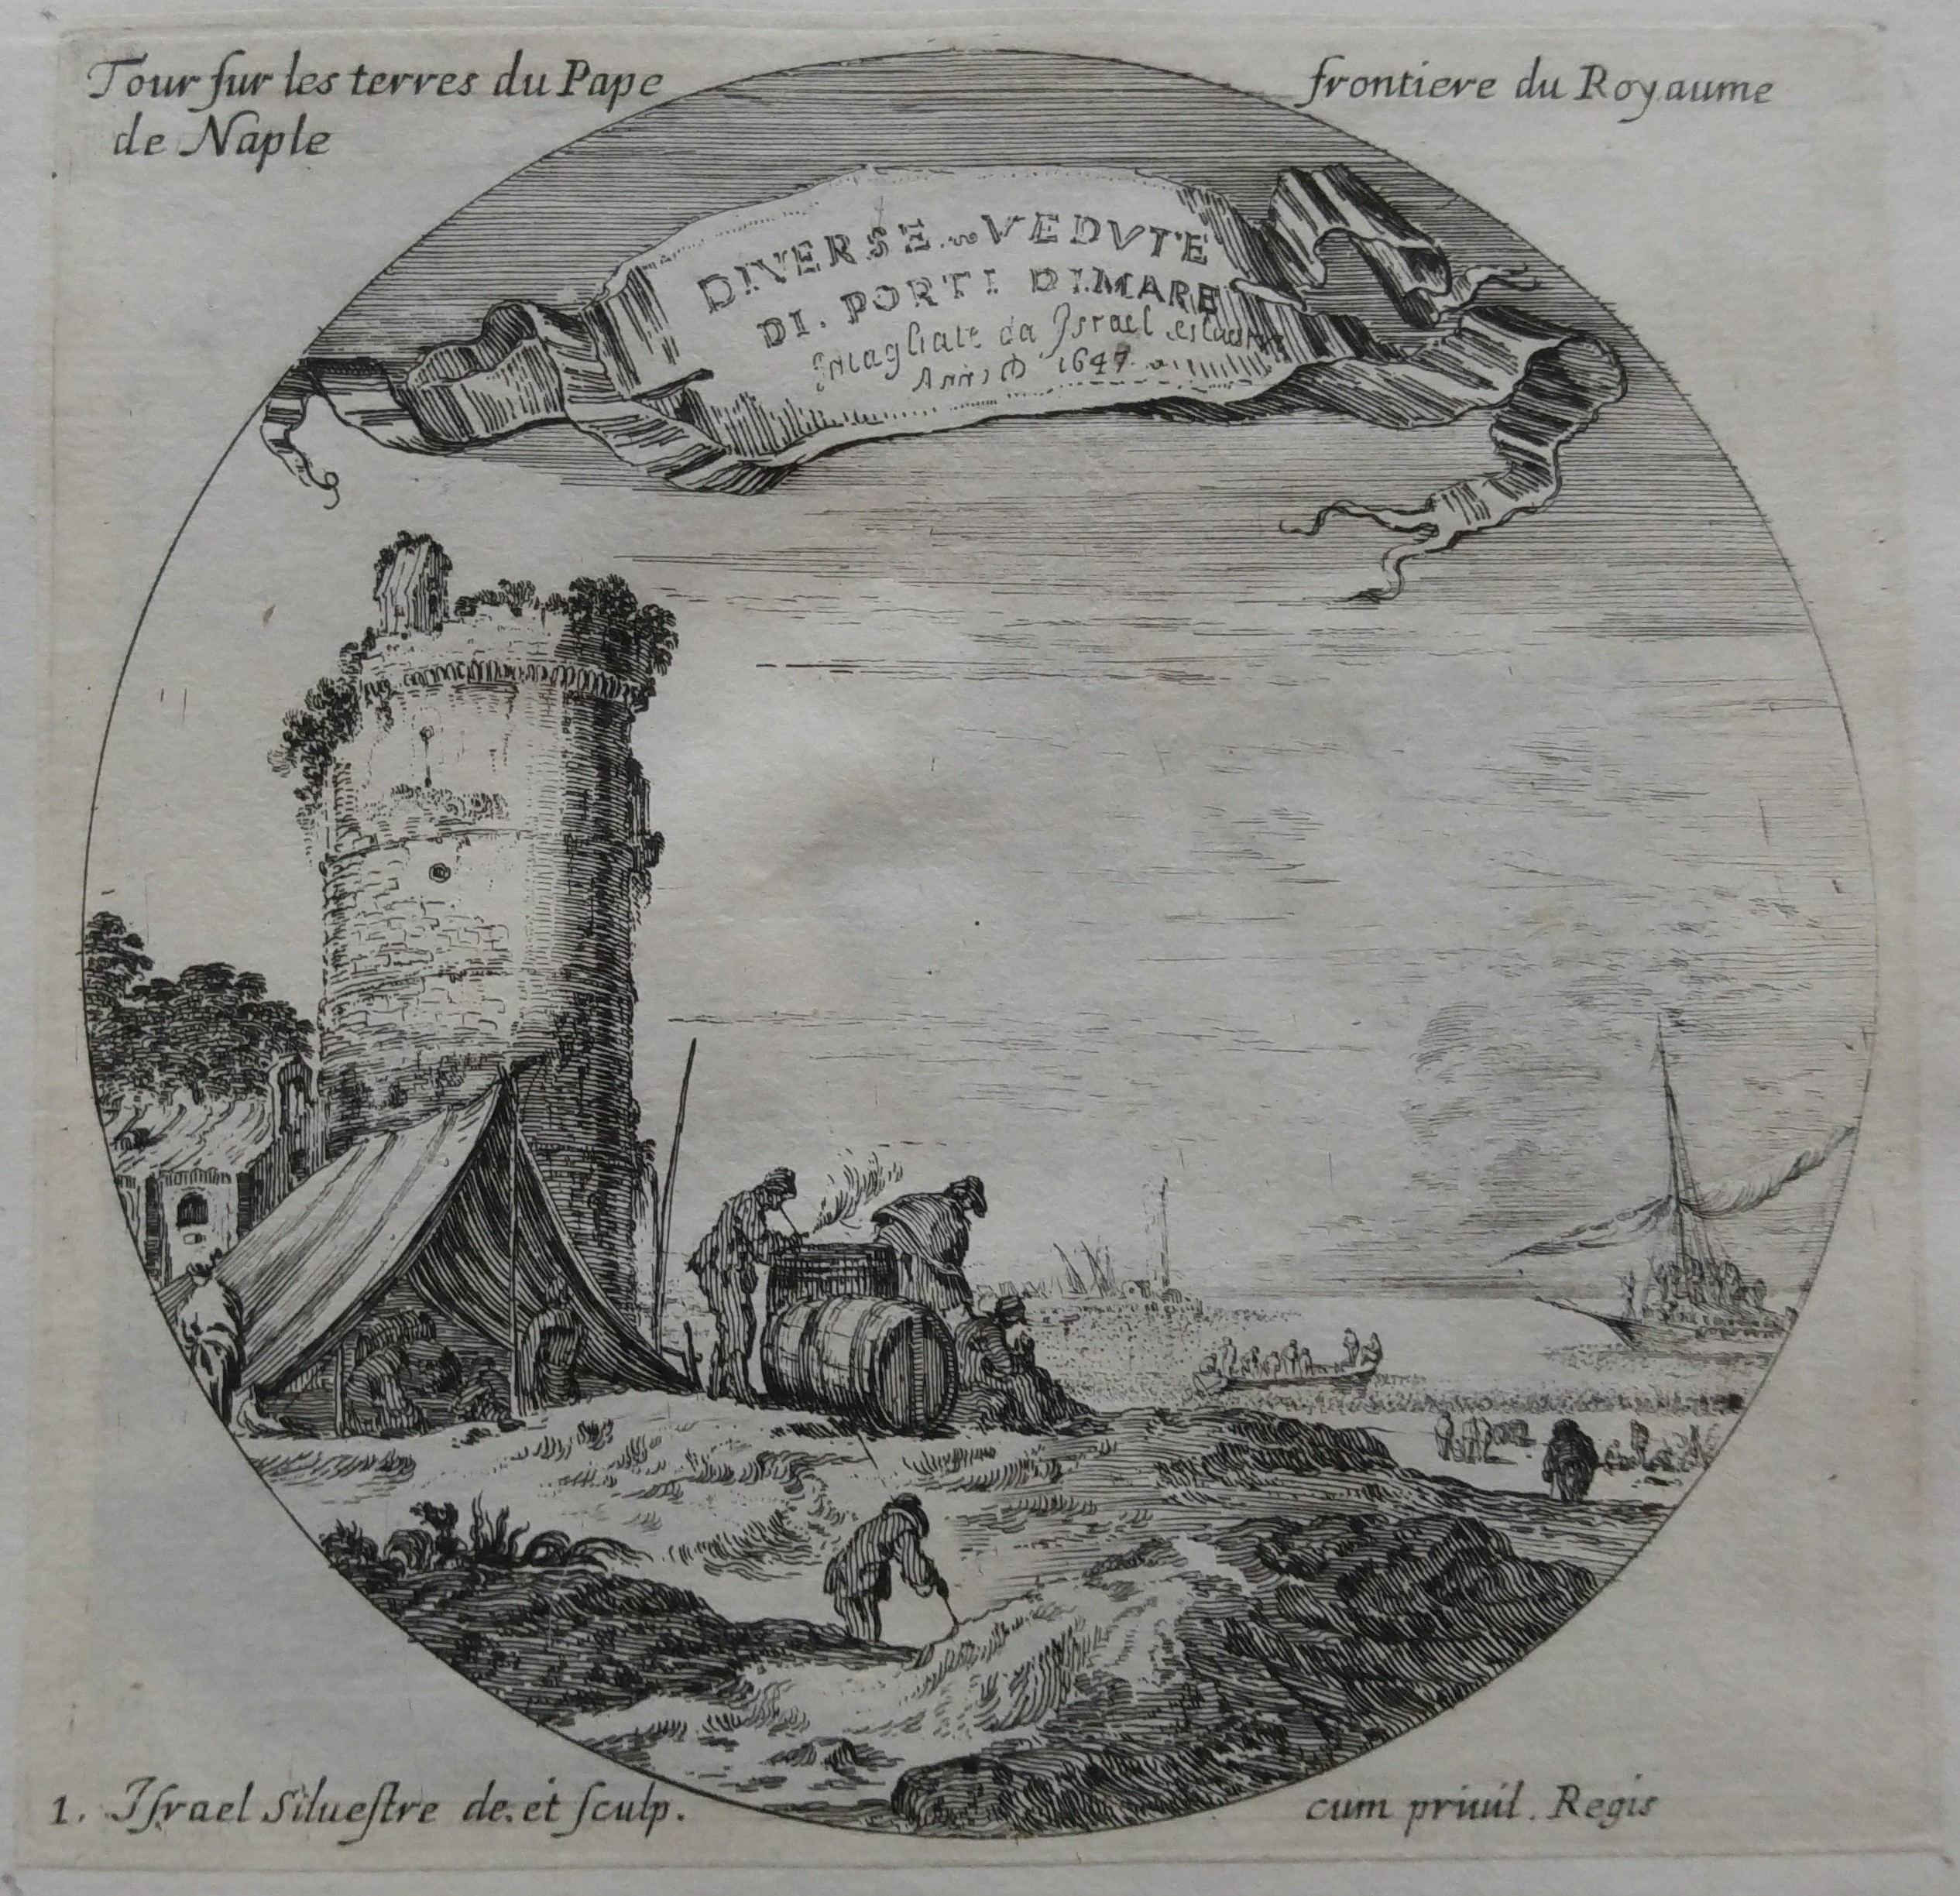 Israël Silvestre : Diverse Vedute Di Porti Di Mare intagliate da Israël Silvestre. Anno D 1647.<br>Tour sur les terres du Pape frontière du Royaume de Naples.